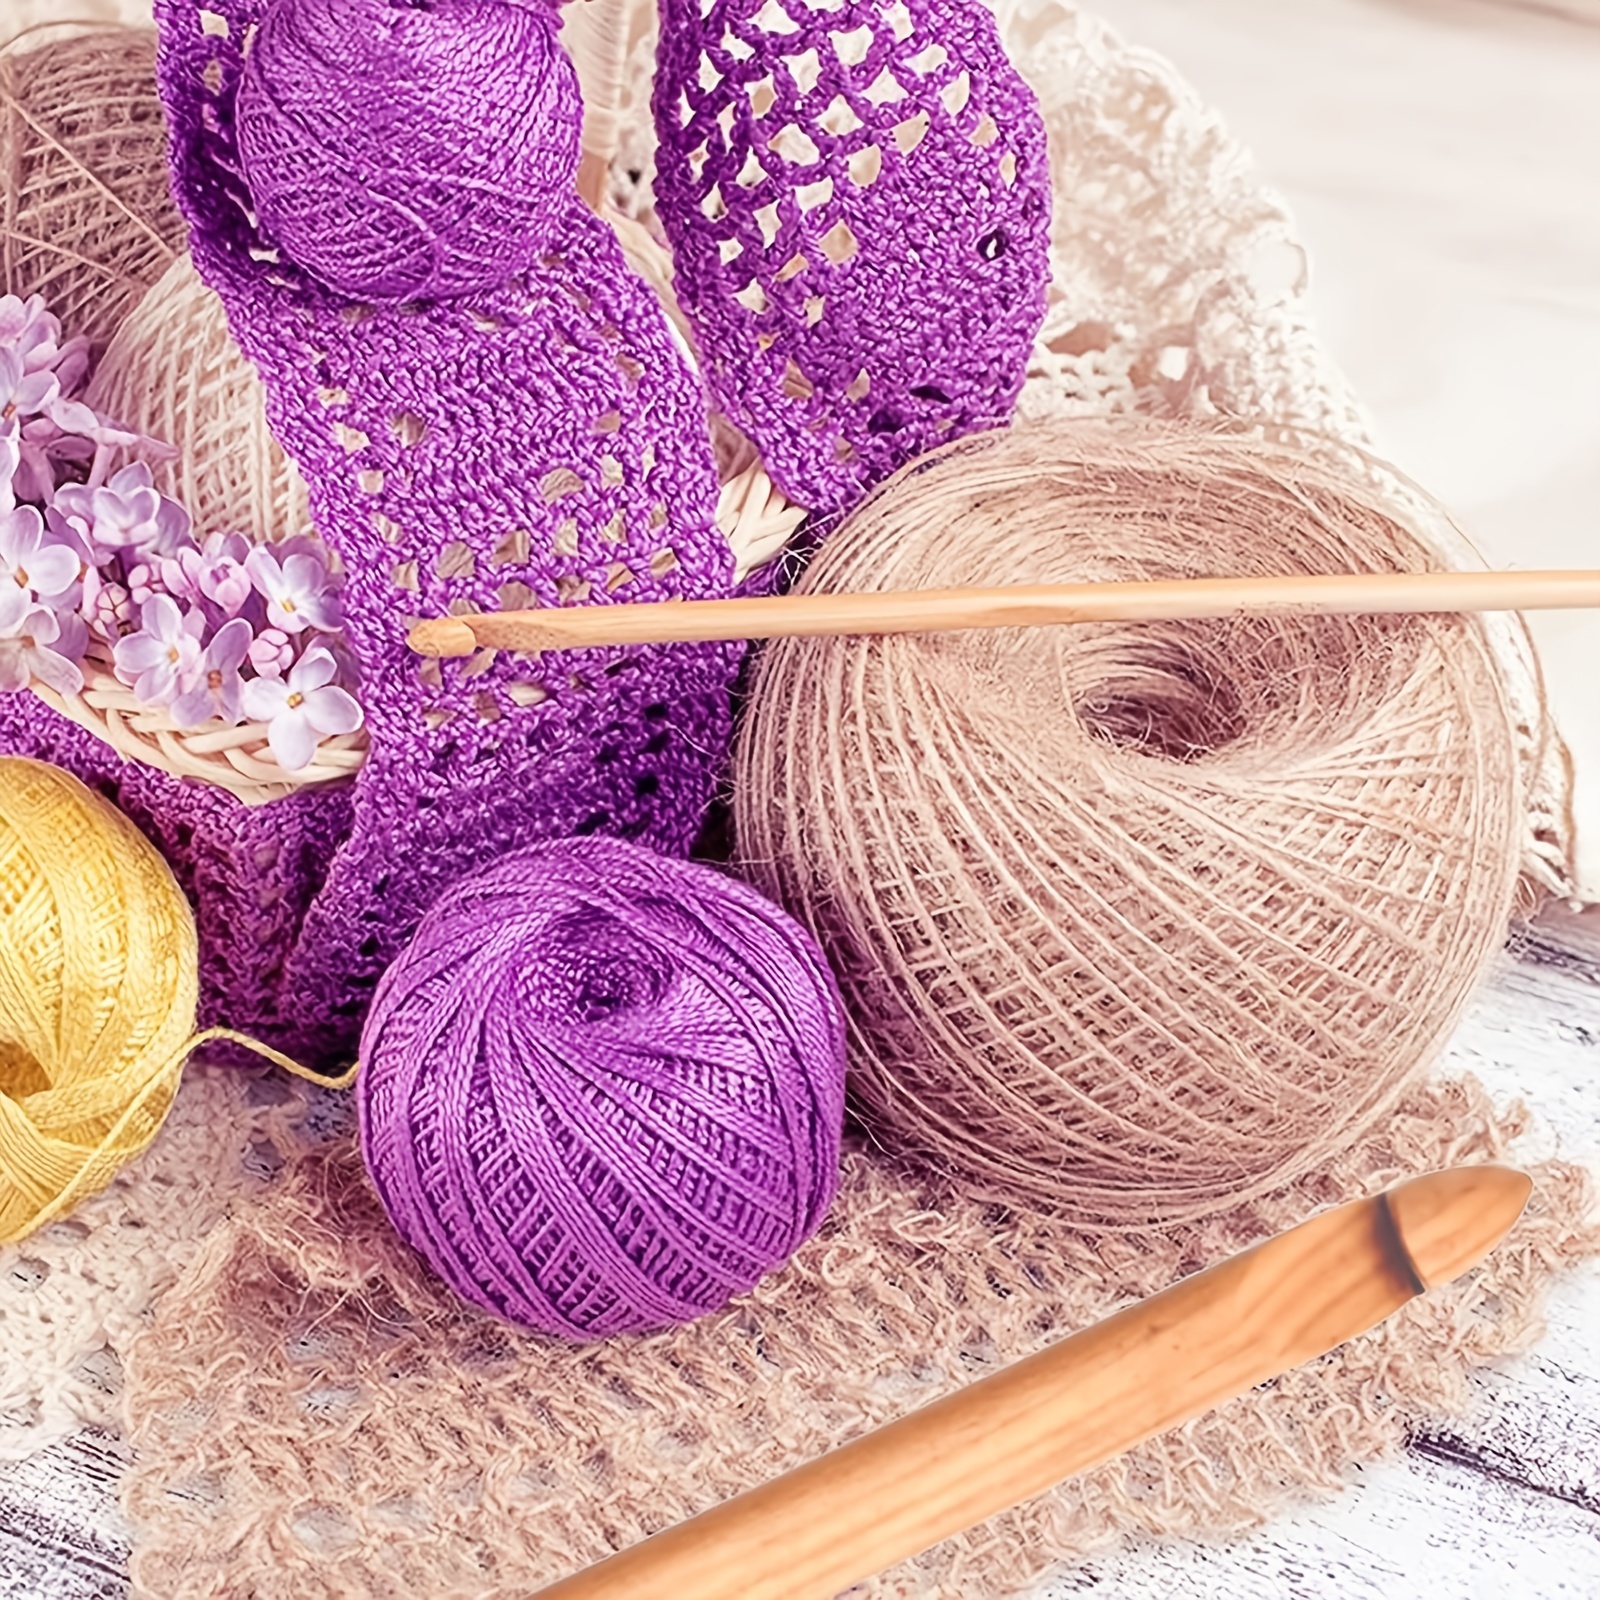 Free Shipping colorful bamboo crochet hooks 12pcs size 3.0-10.0mm crafts  crochet for DIY knitting needlework knitting needles